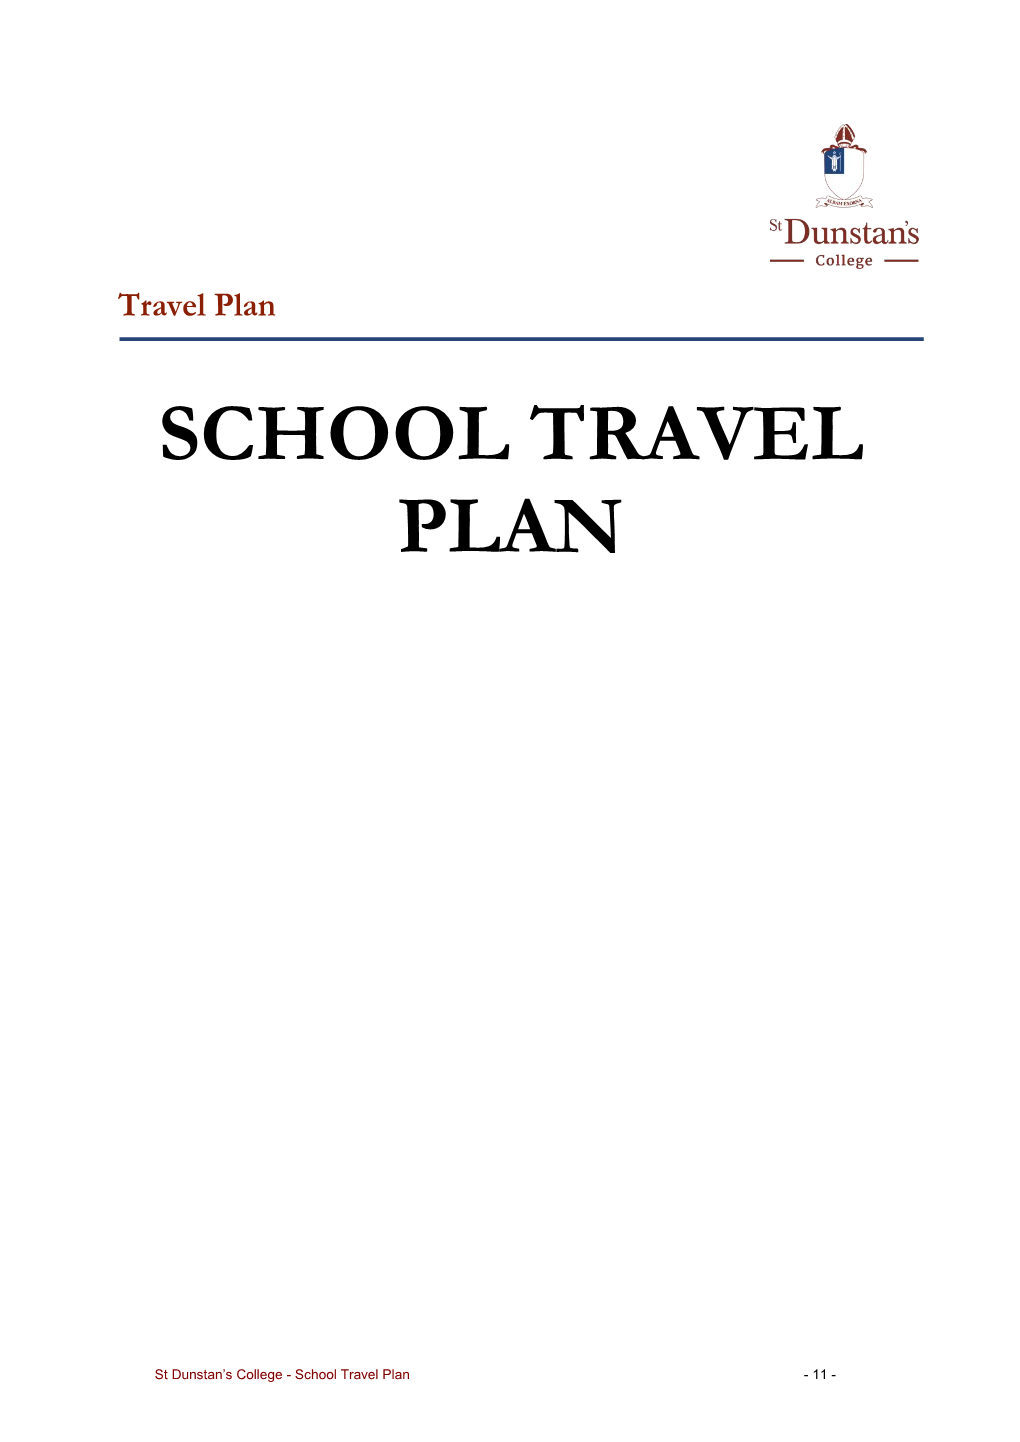 School Travel Plan